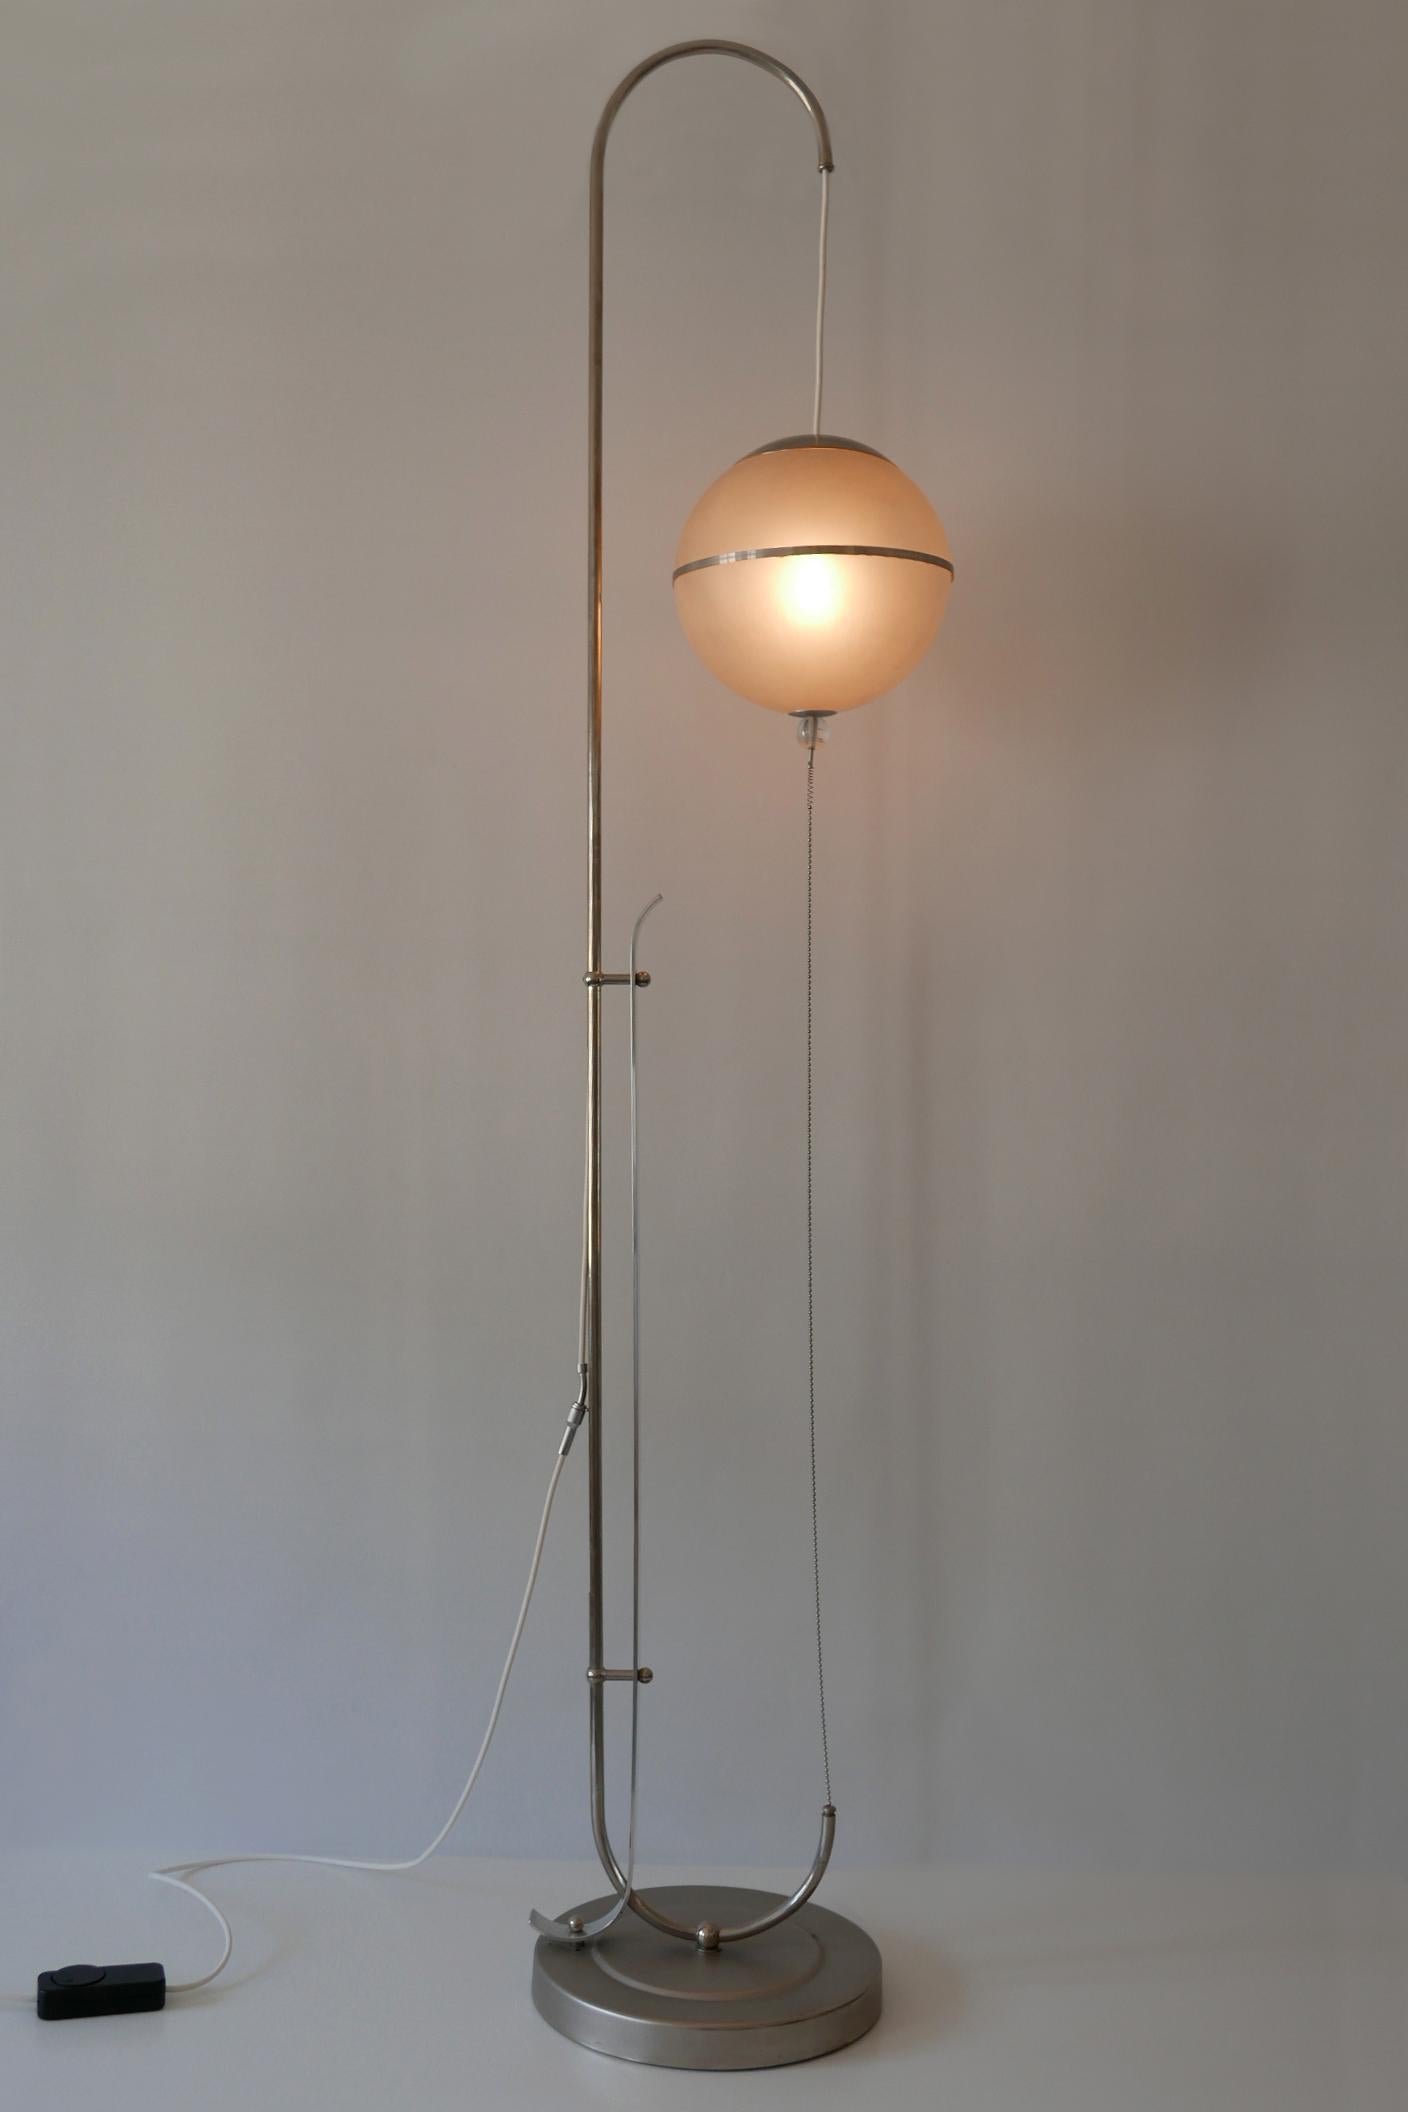 Bauhaus Floor Lamp by Karl Trabert for Schanzenbach & Co 1930s Germany In Good Condition For Sale In Munich, DE